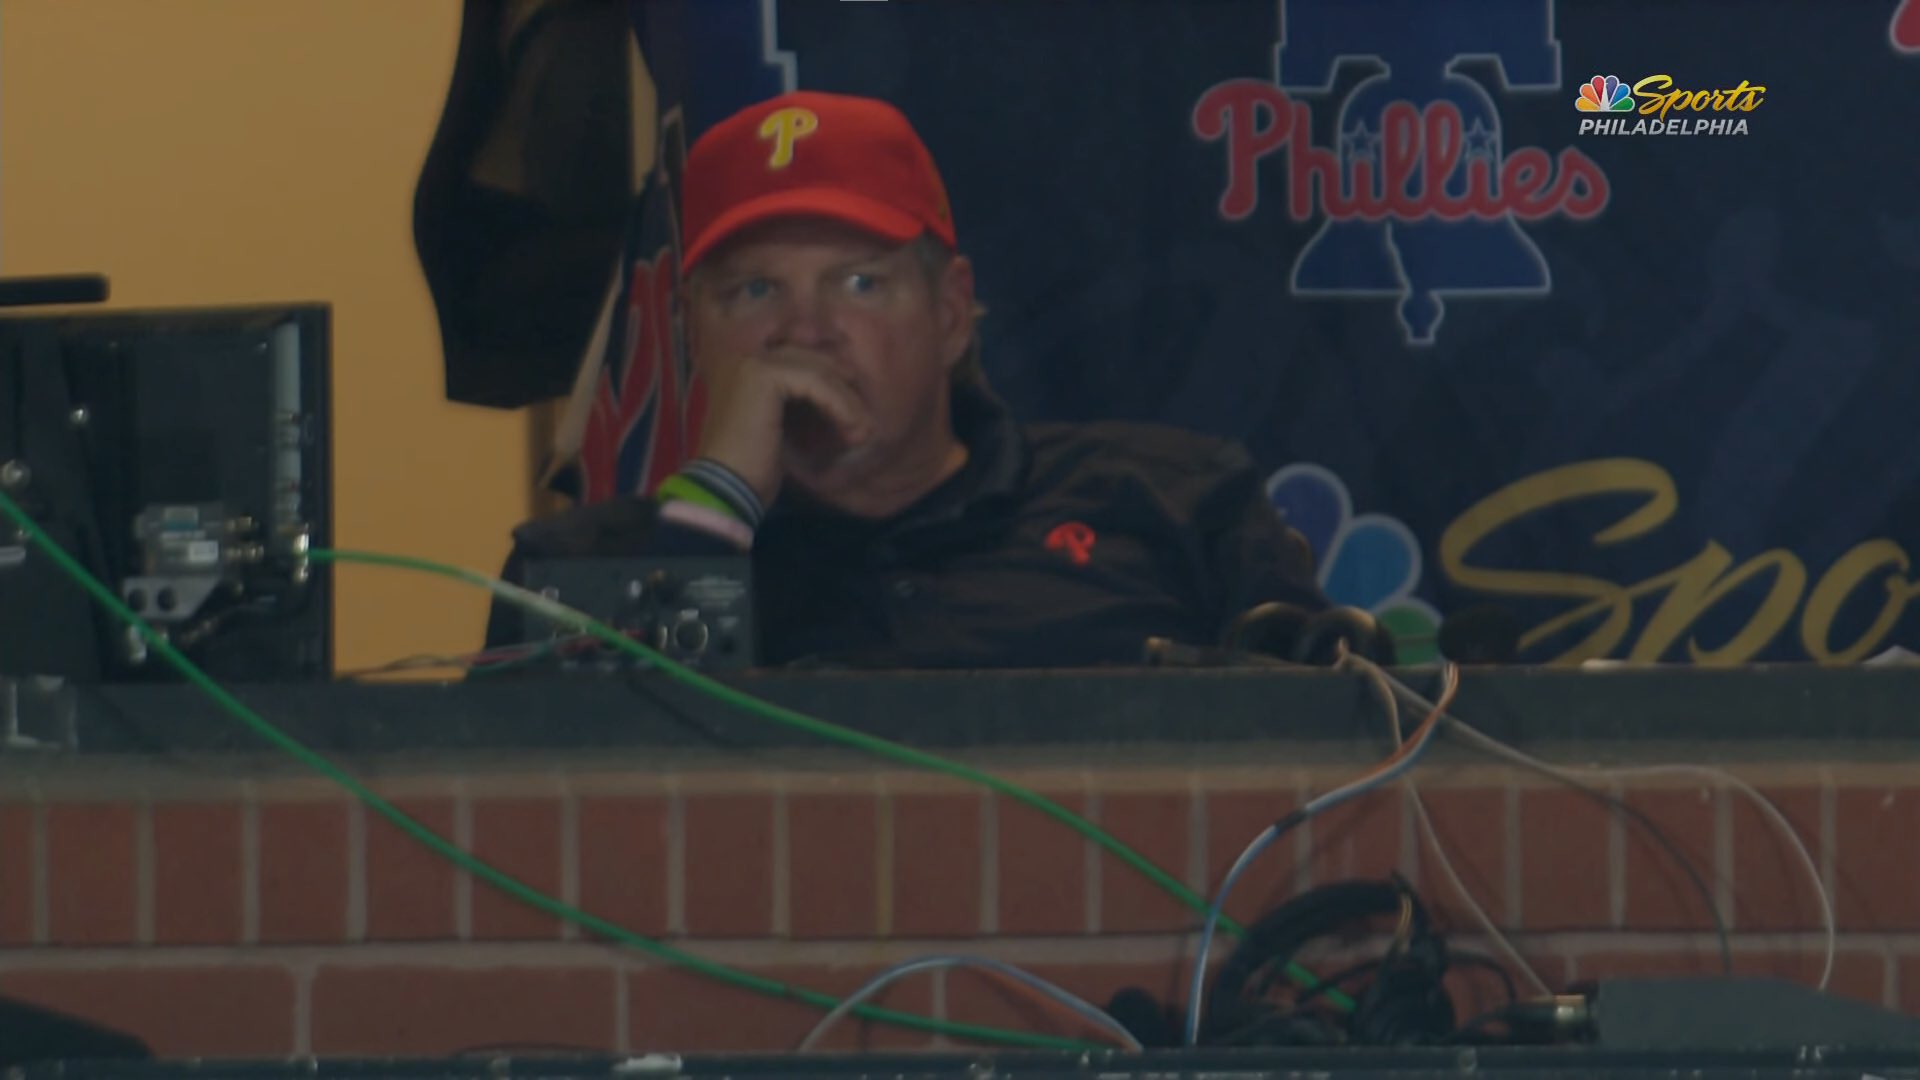 Phillies TV announcer John Kruk and the St. Louis Arch, explained